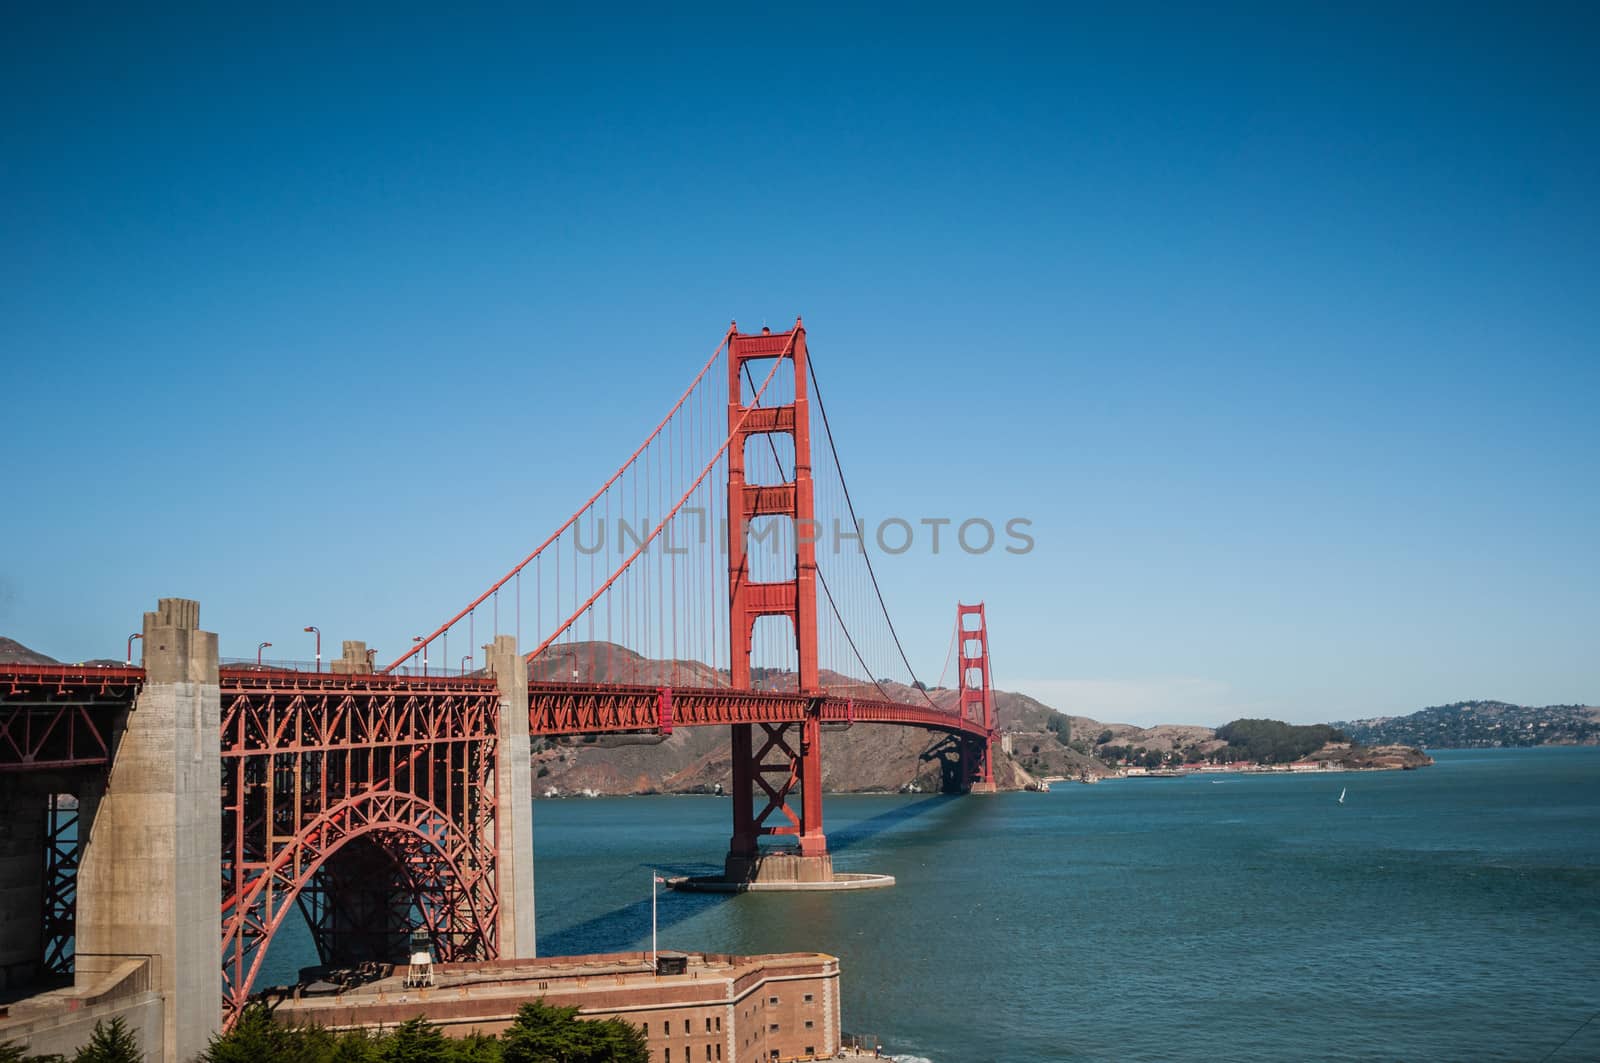 Golden Gate Bridge in San Francisco, California, USA Summer 2013